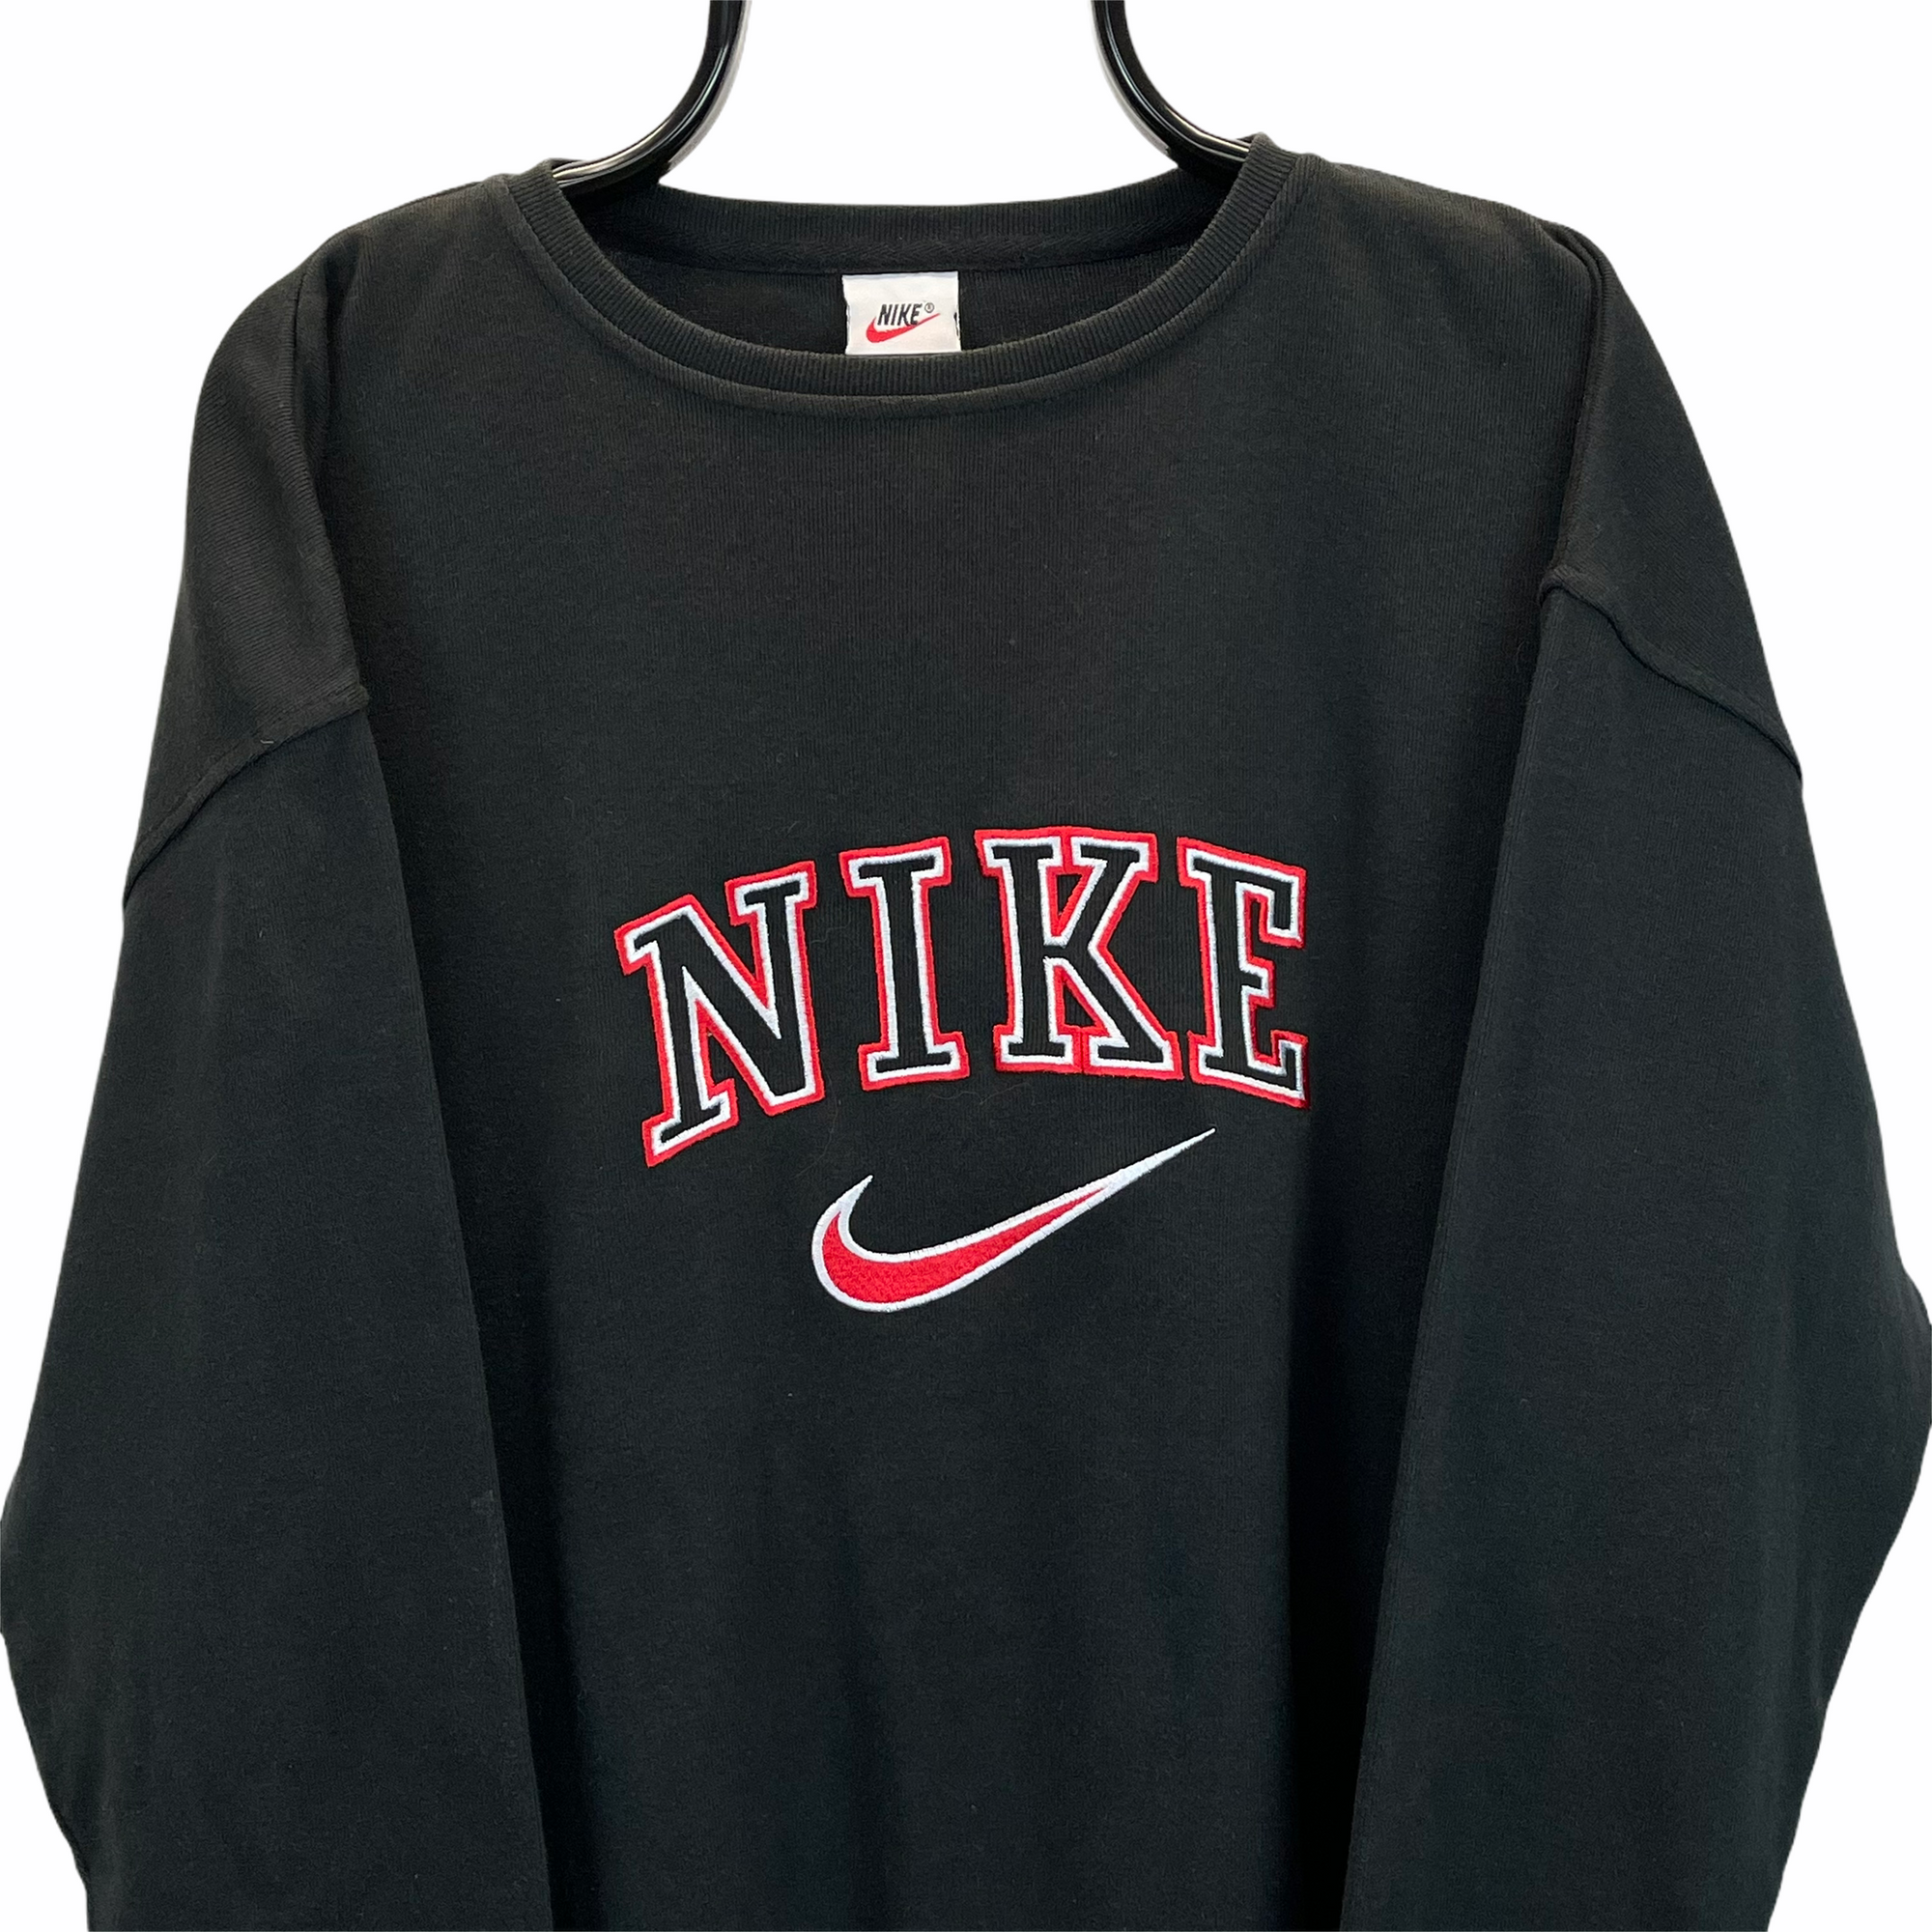 Vintage 90s Nike Spellout Sweatshirt in Black & Red - Men's Large/Women's XL